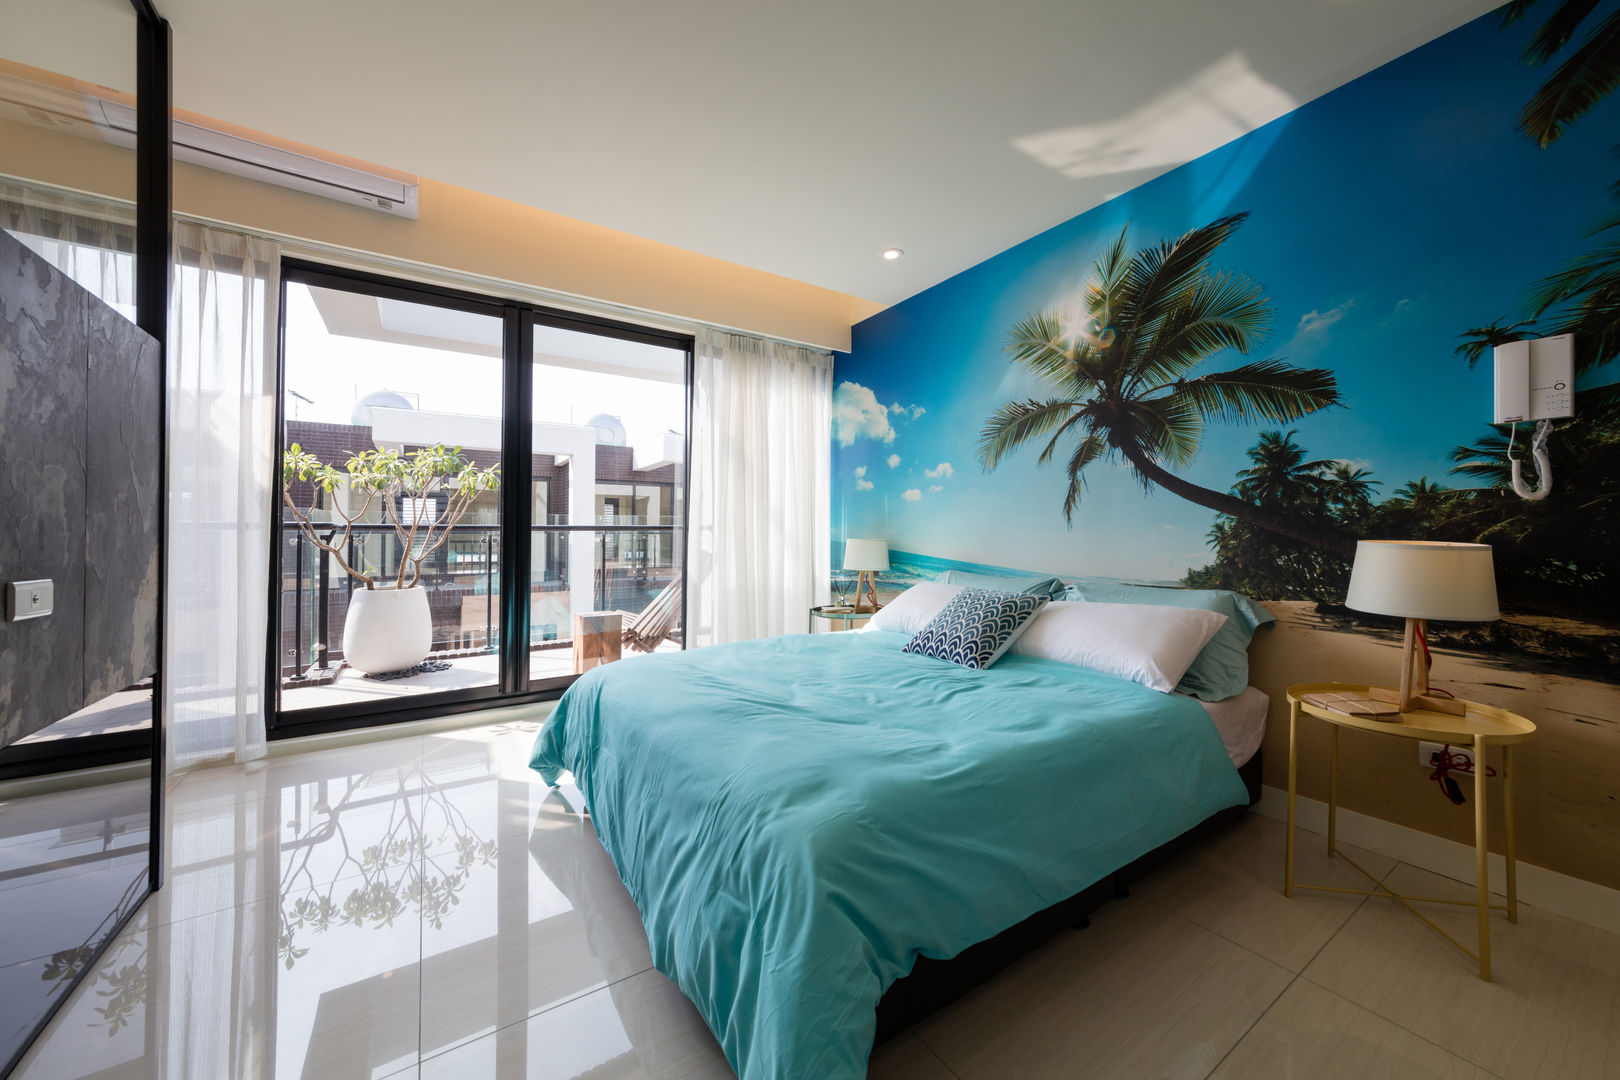 海洋壁貼 木皆空間設計 Tropical style bedroom